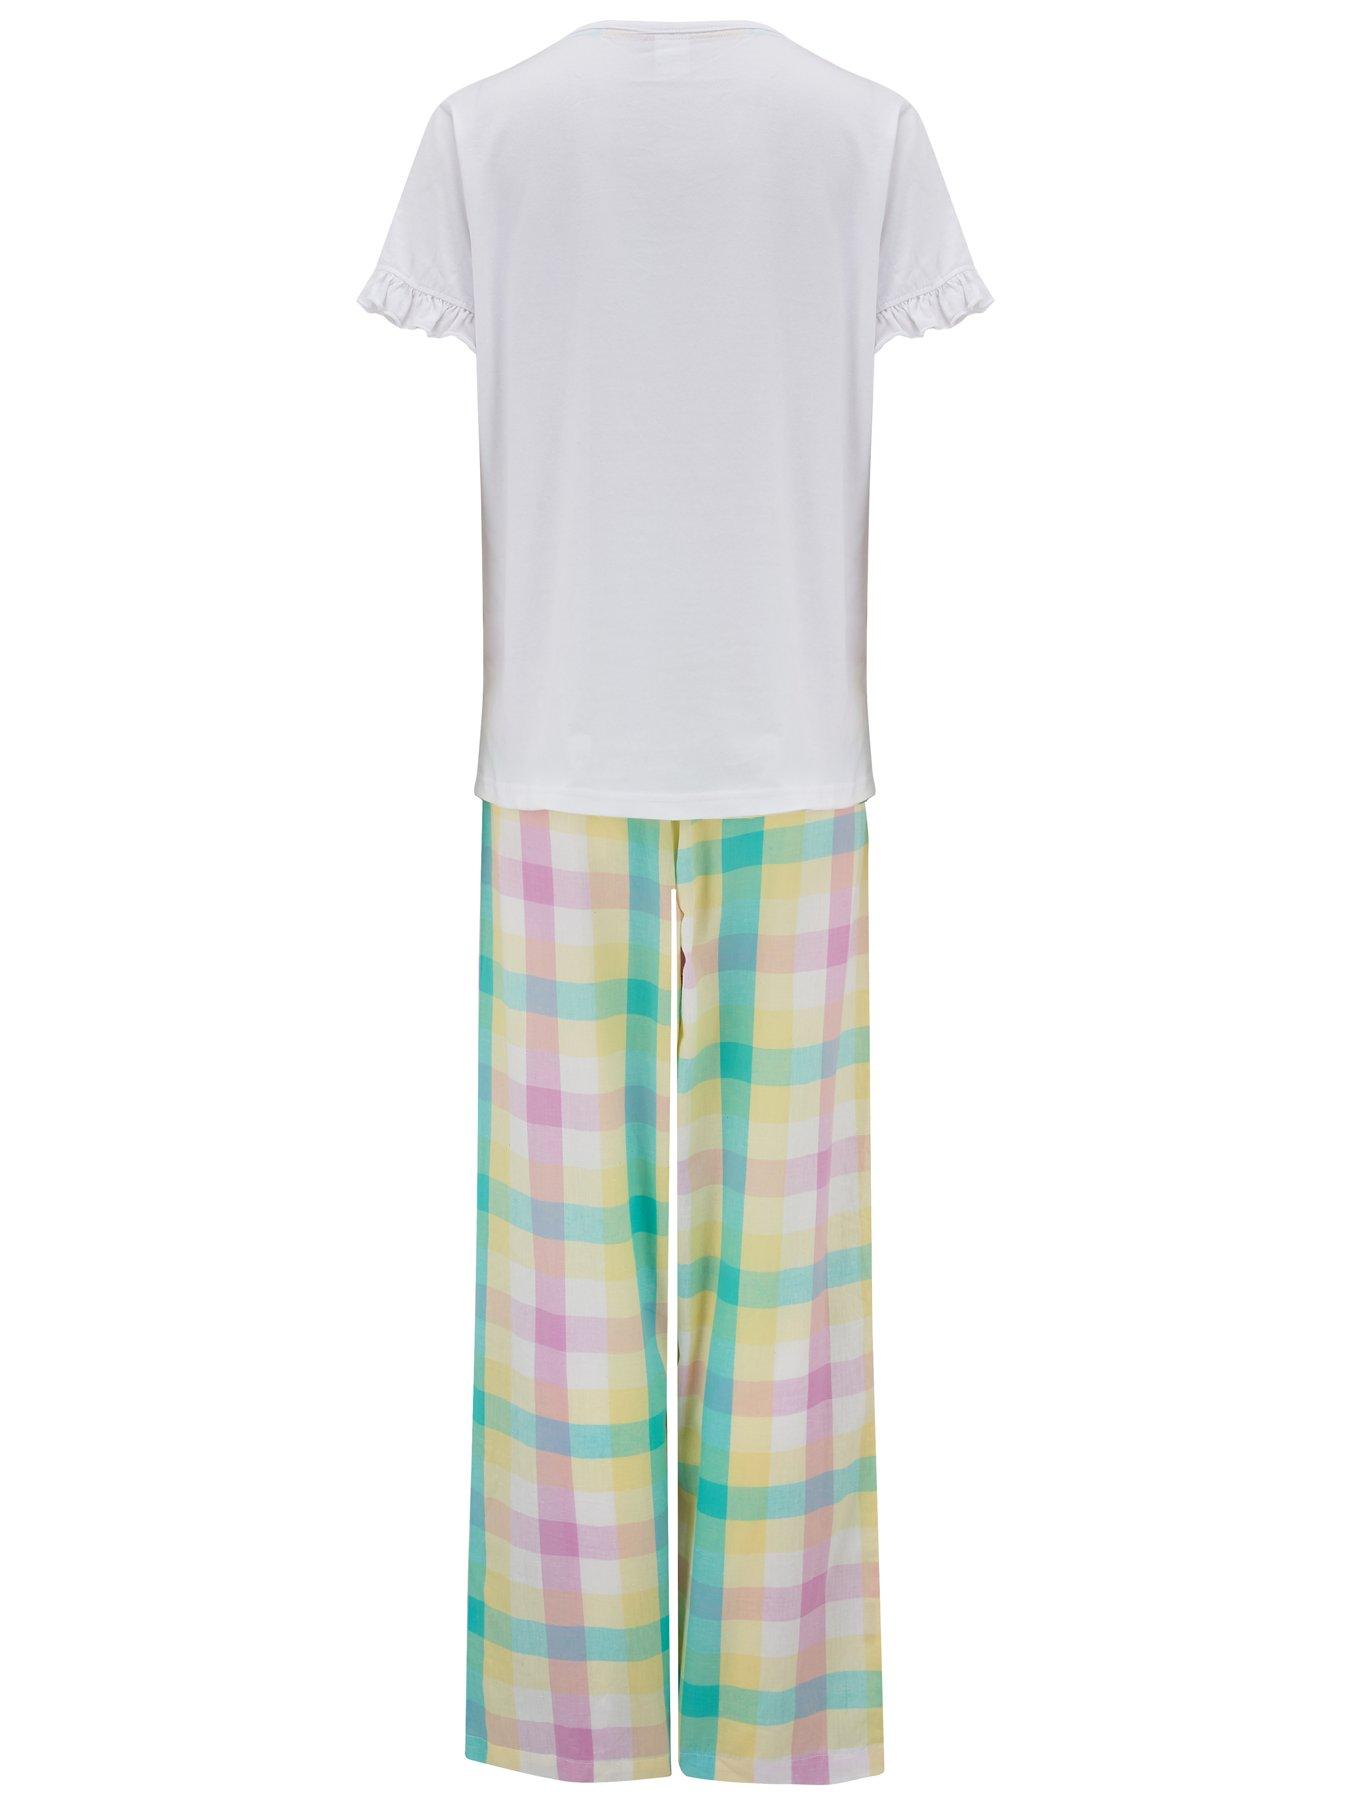 Nightwear & Loungewear Staying In Cotton Jersey T-Shirt And Check Trouser Pyjama - White/Multi